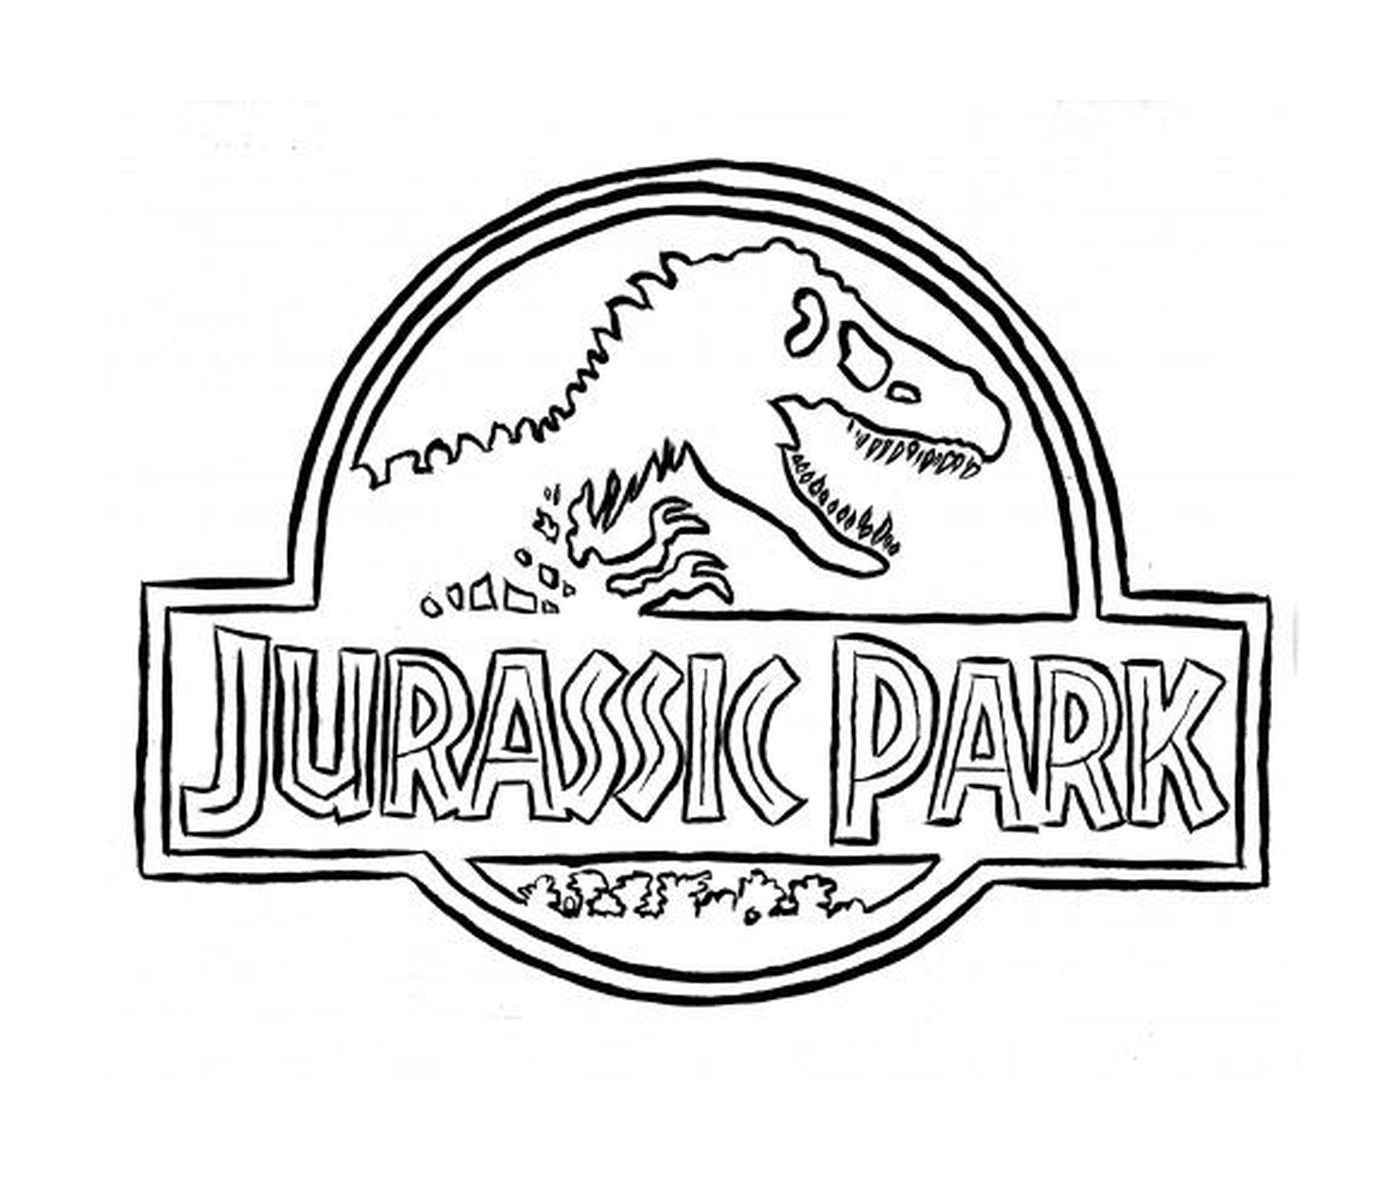  Logotipo do Jurassic Park, símbolo mítico 